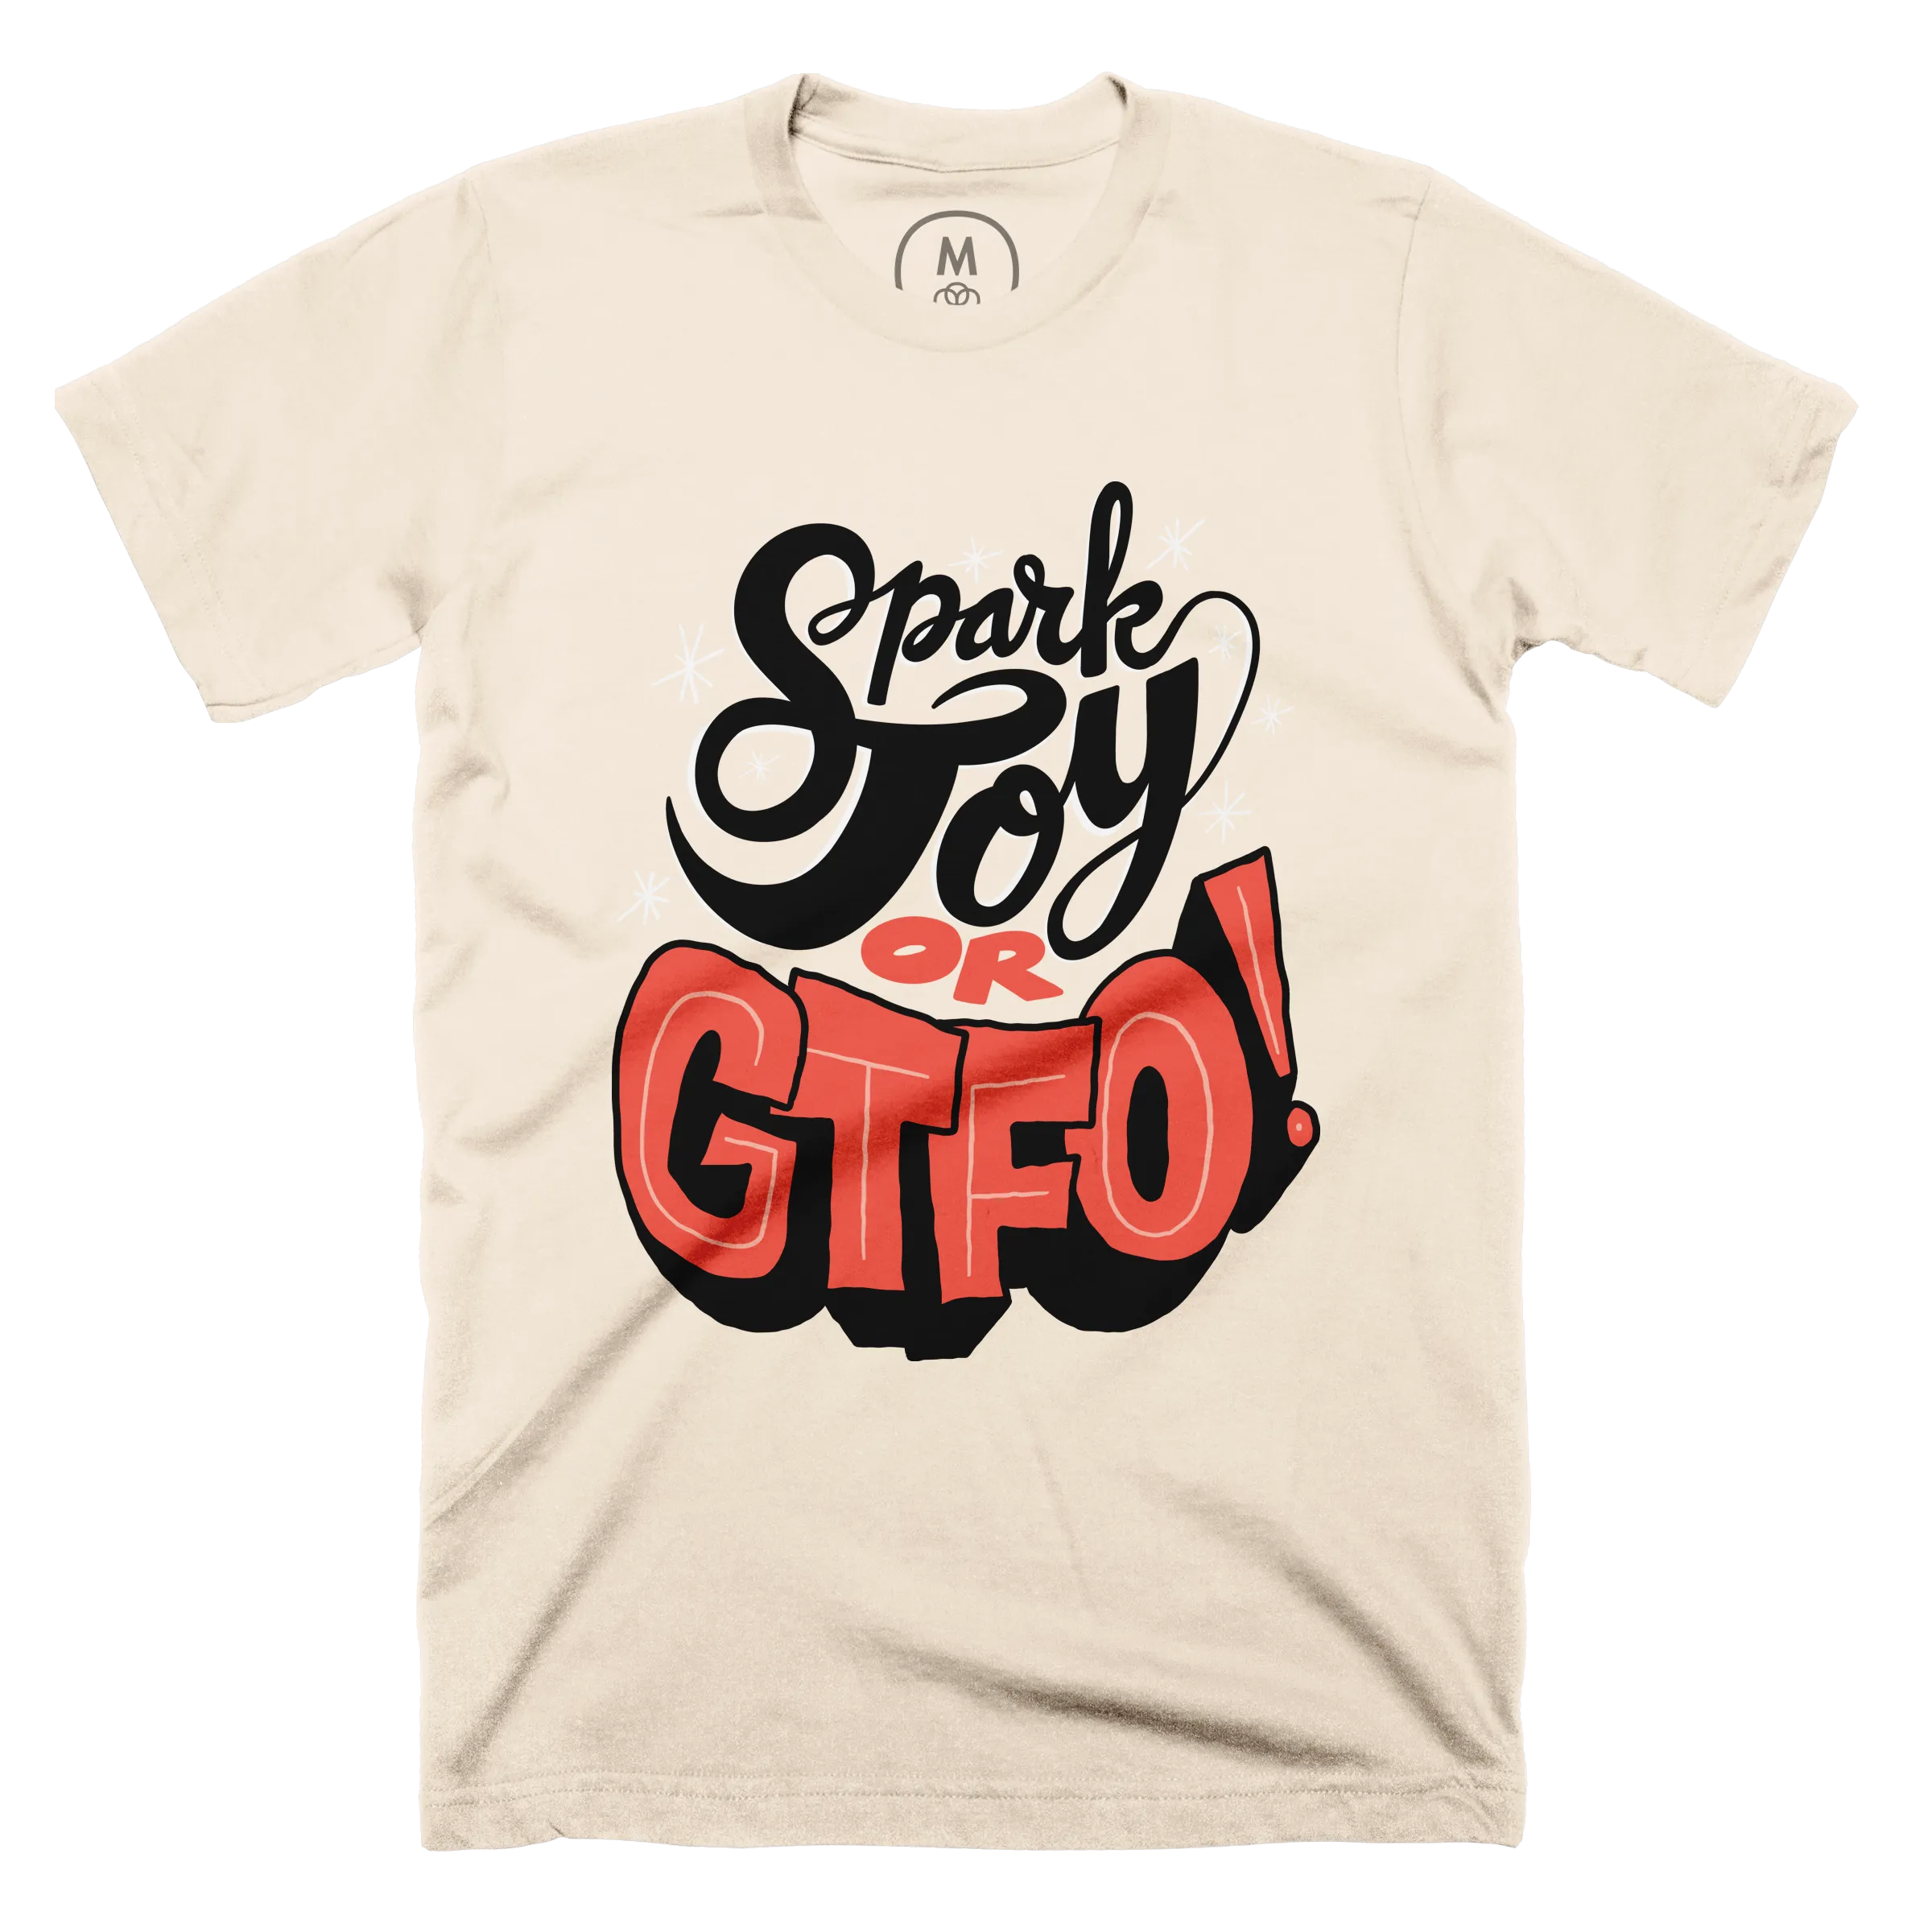 GTFO” graphic tee, pullover hoodie, tank, zip-up hoodie, and